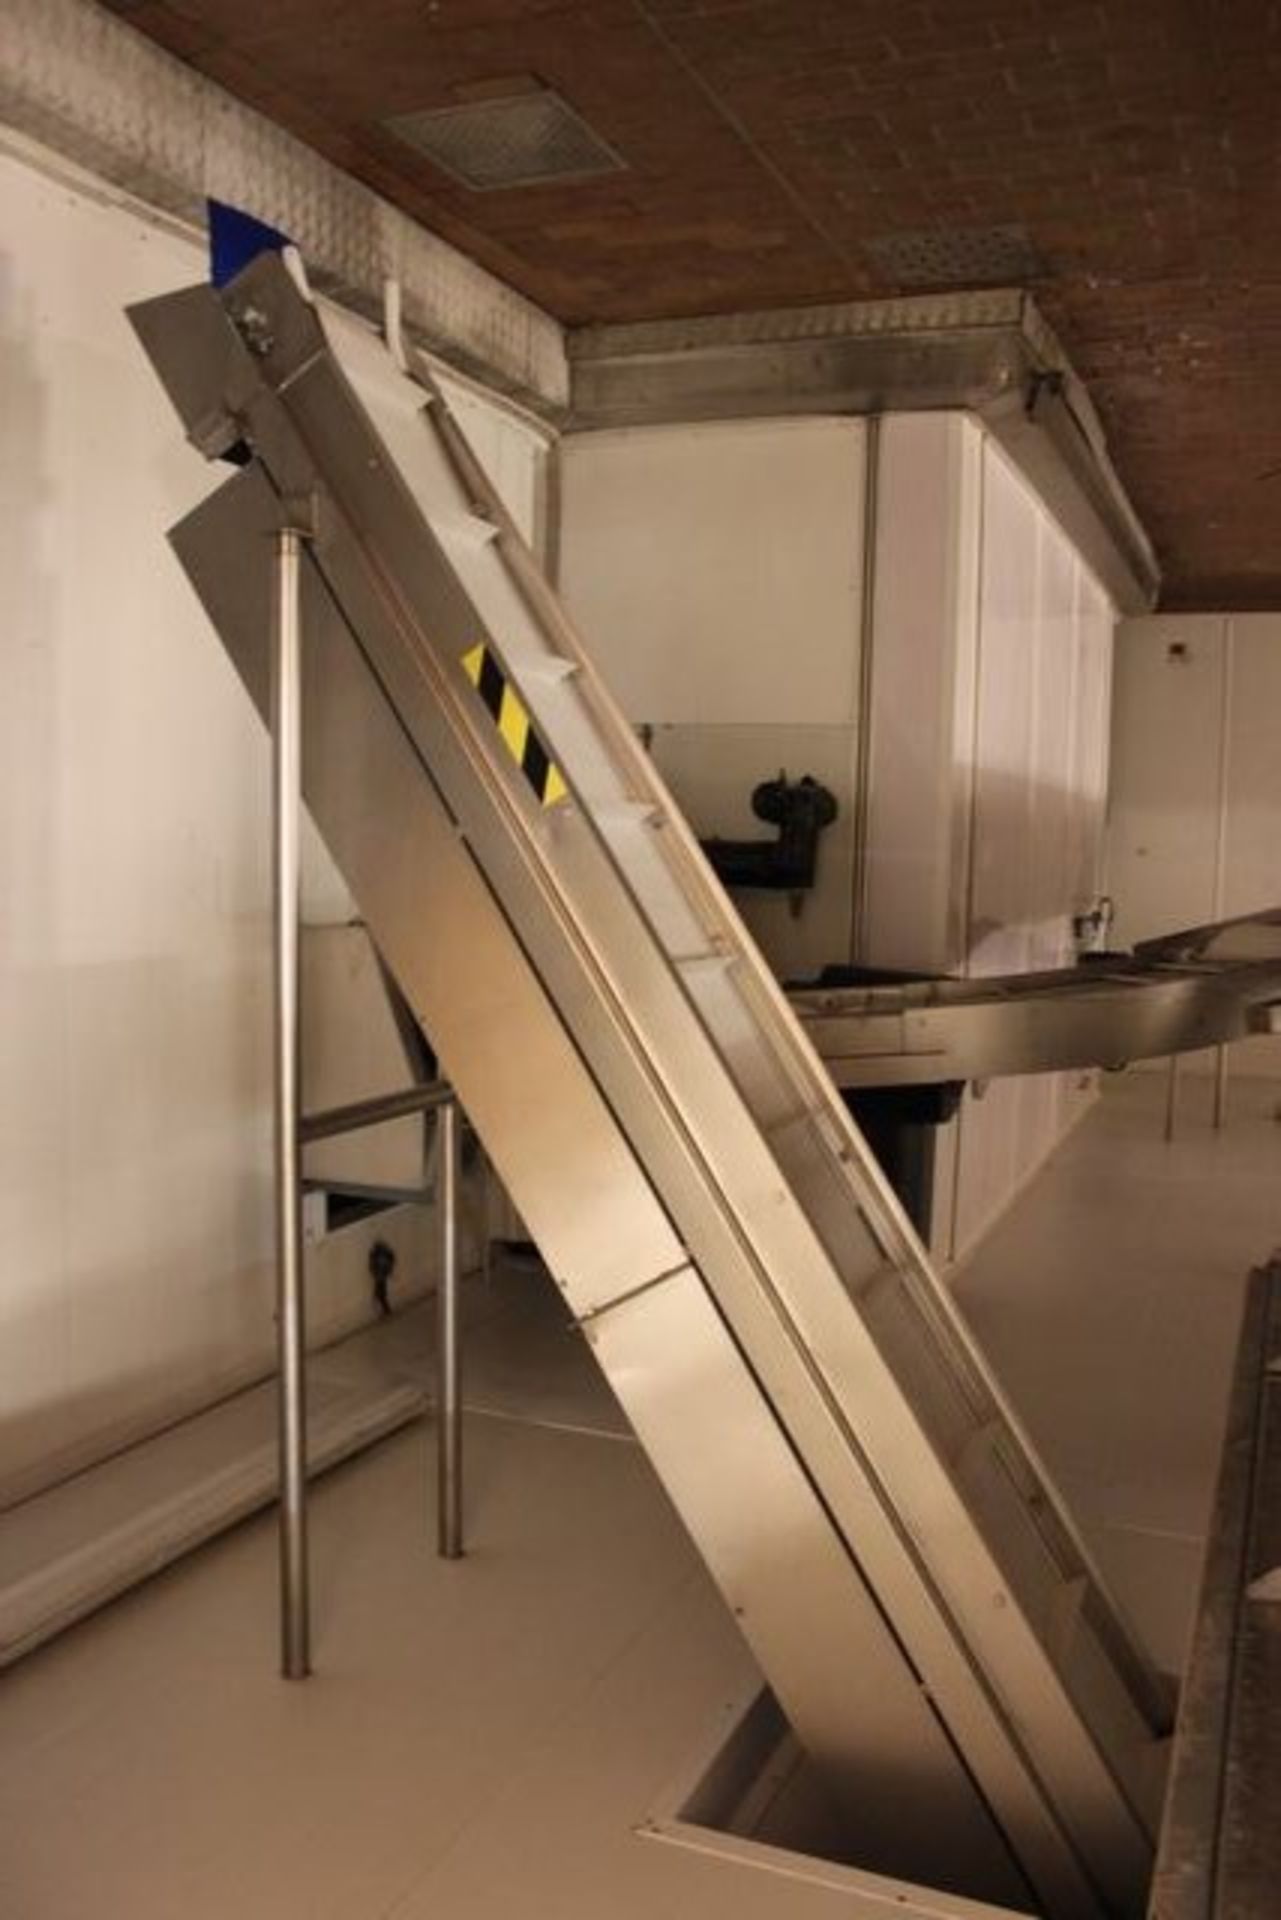 Stainless steel framed swan neck conveyor with flighted slatted belt conveyor 5m x 360mm - Image 2 of 2